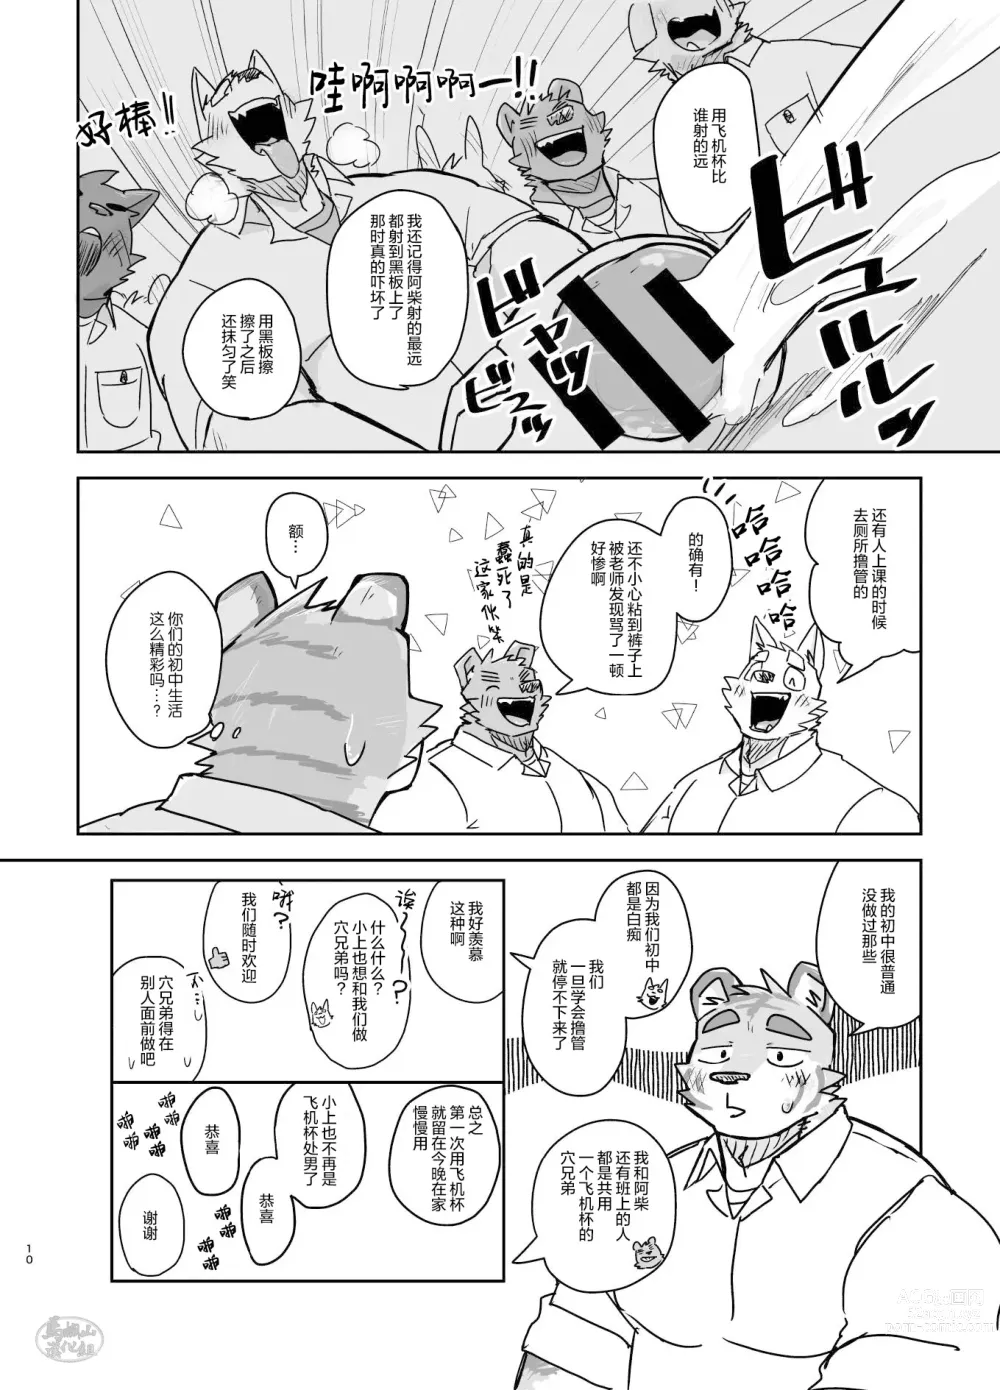 Page 10 of doujinshi 关于我在教室被榨精这件事